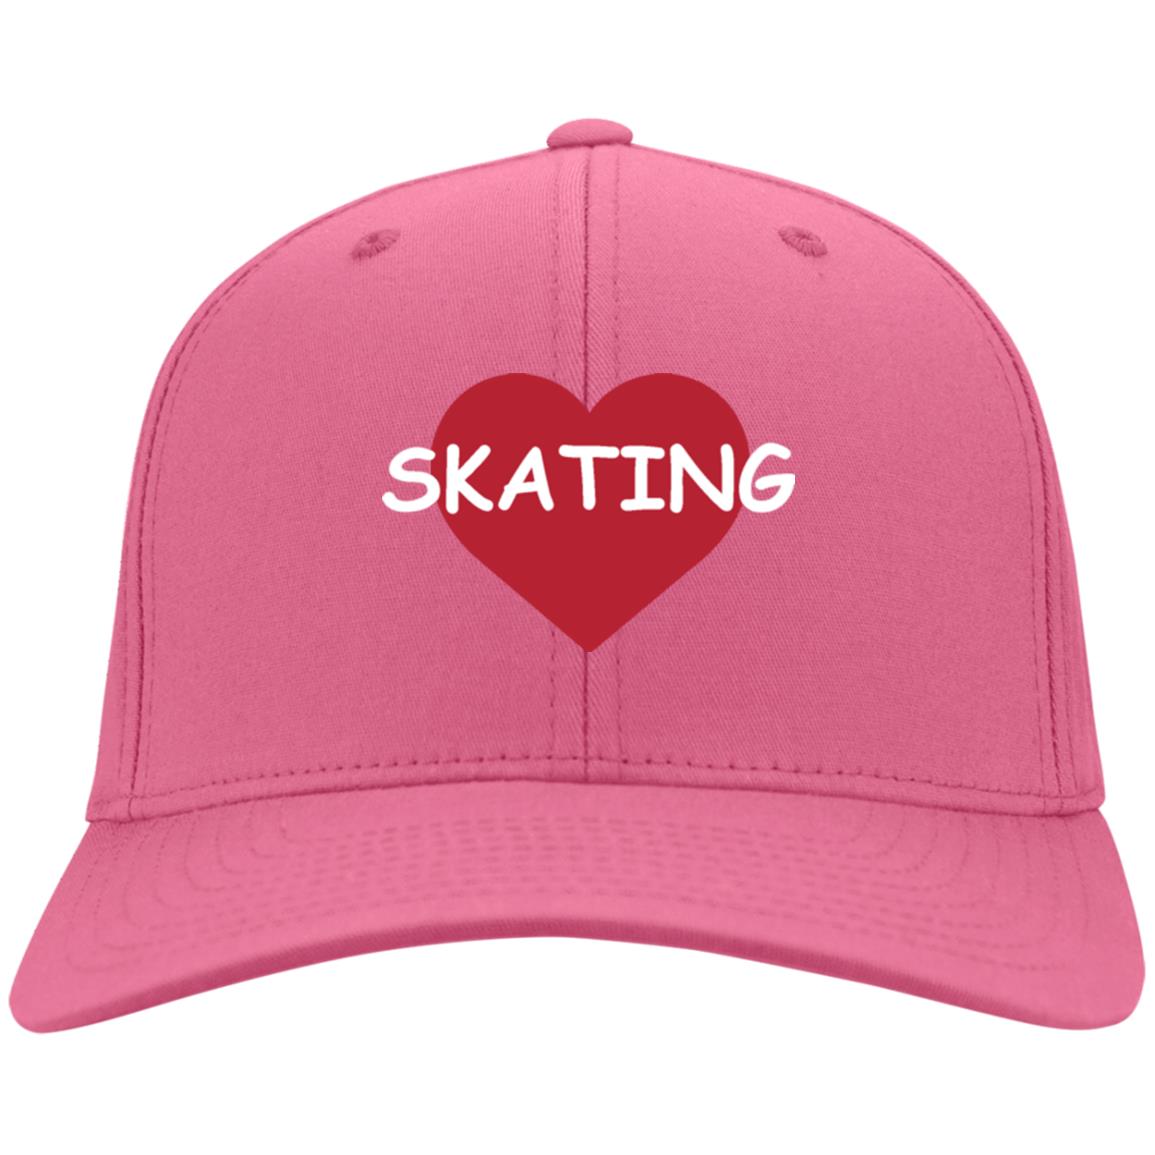 Skating Sport Hat